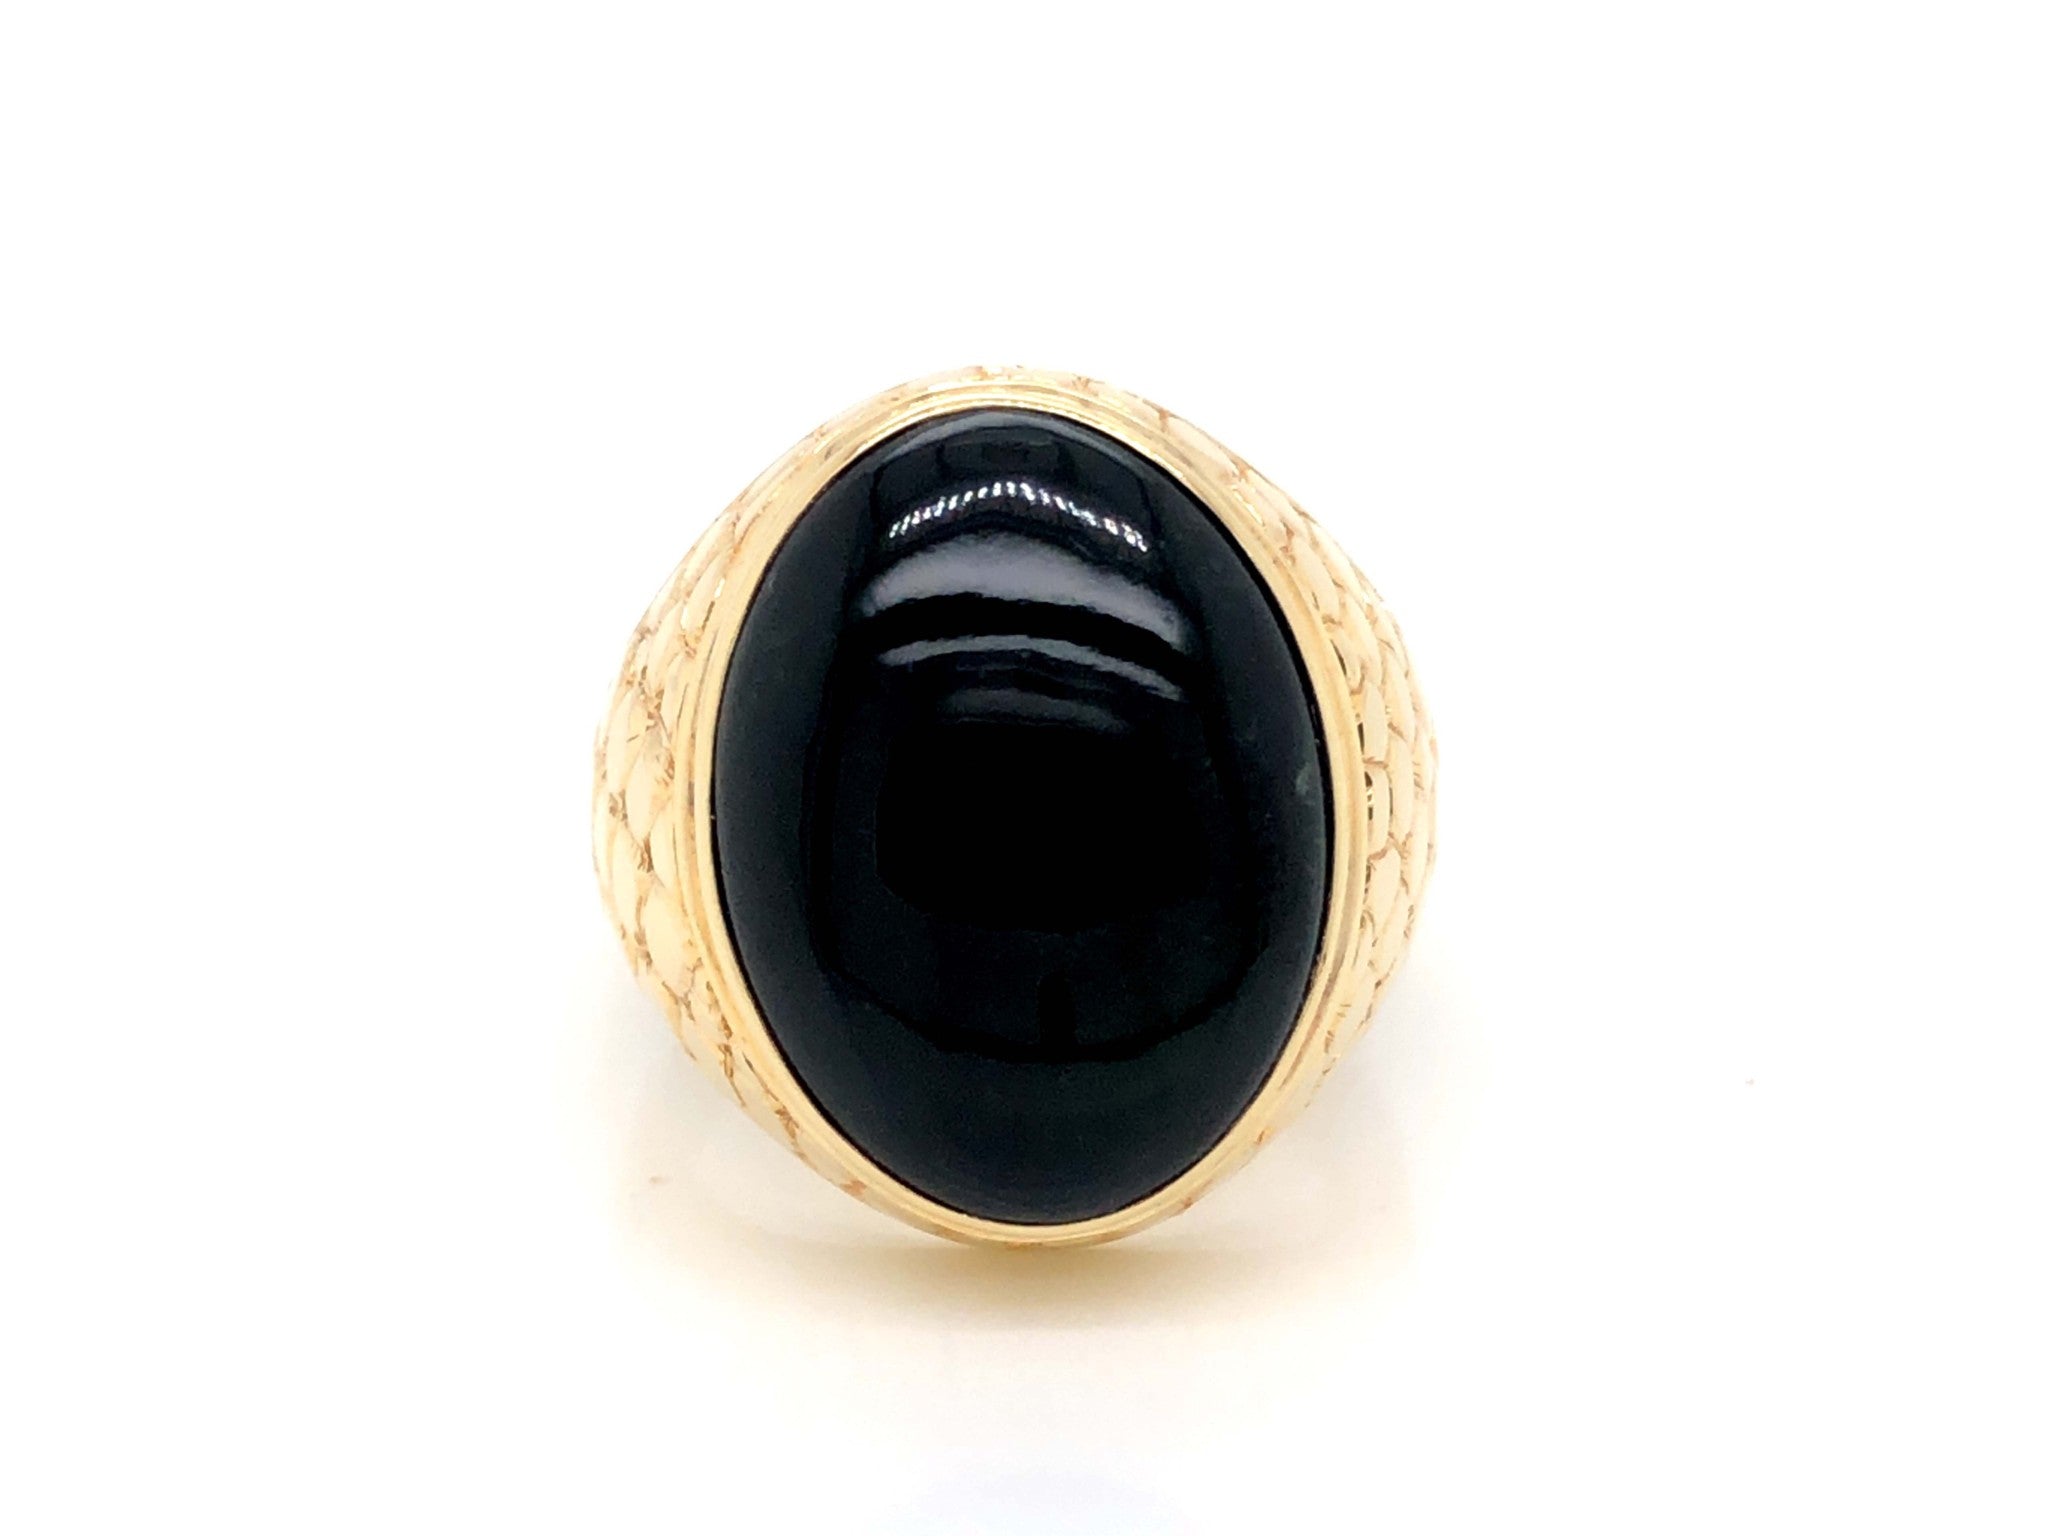 Vintage Mens Ring,Vintage Men's Large Black Jade Ring with Reptile Design in 14k Yellow Gold